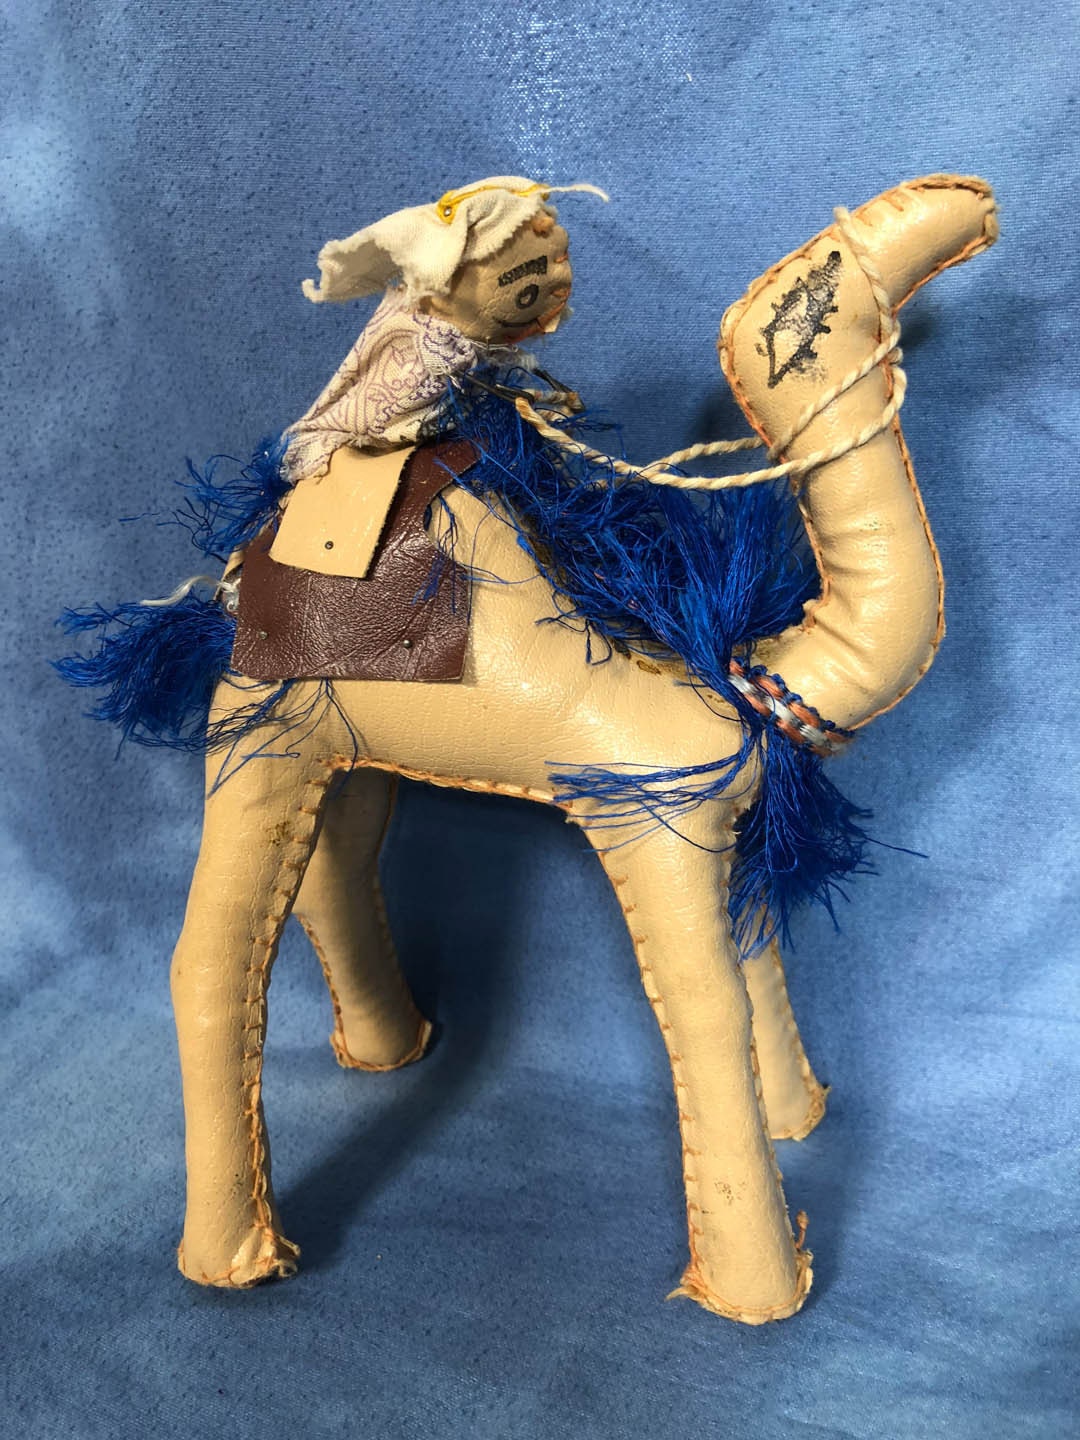 9 Vintage Leather Stitched Camel Rider Racer Toy Figurine Souvenir Stuffed Folk Art